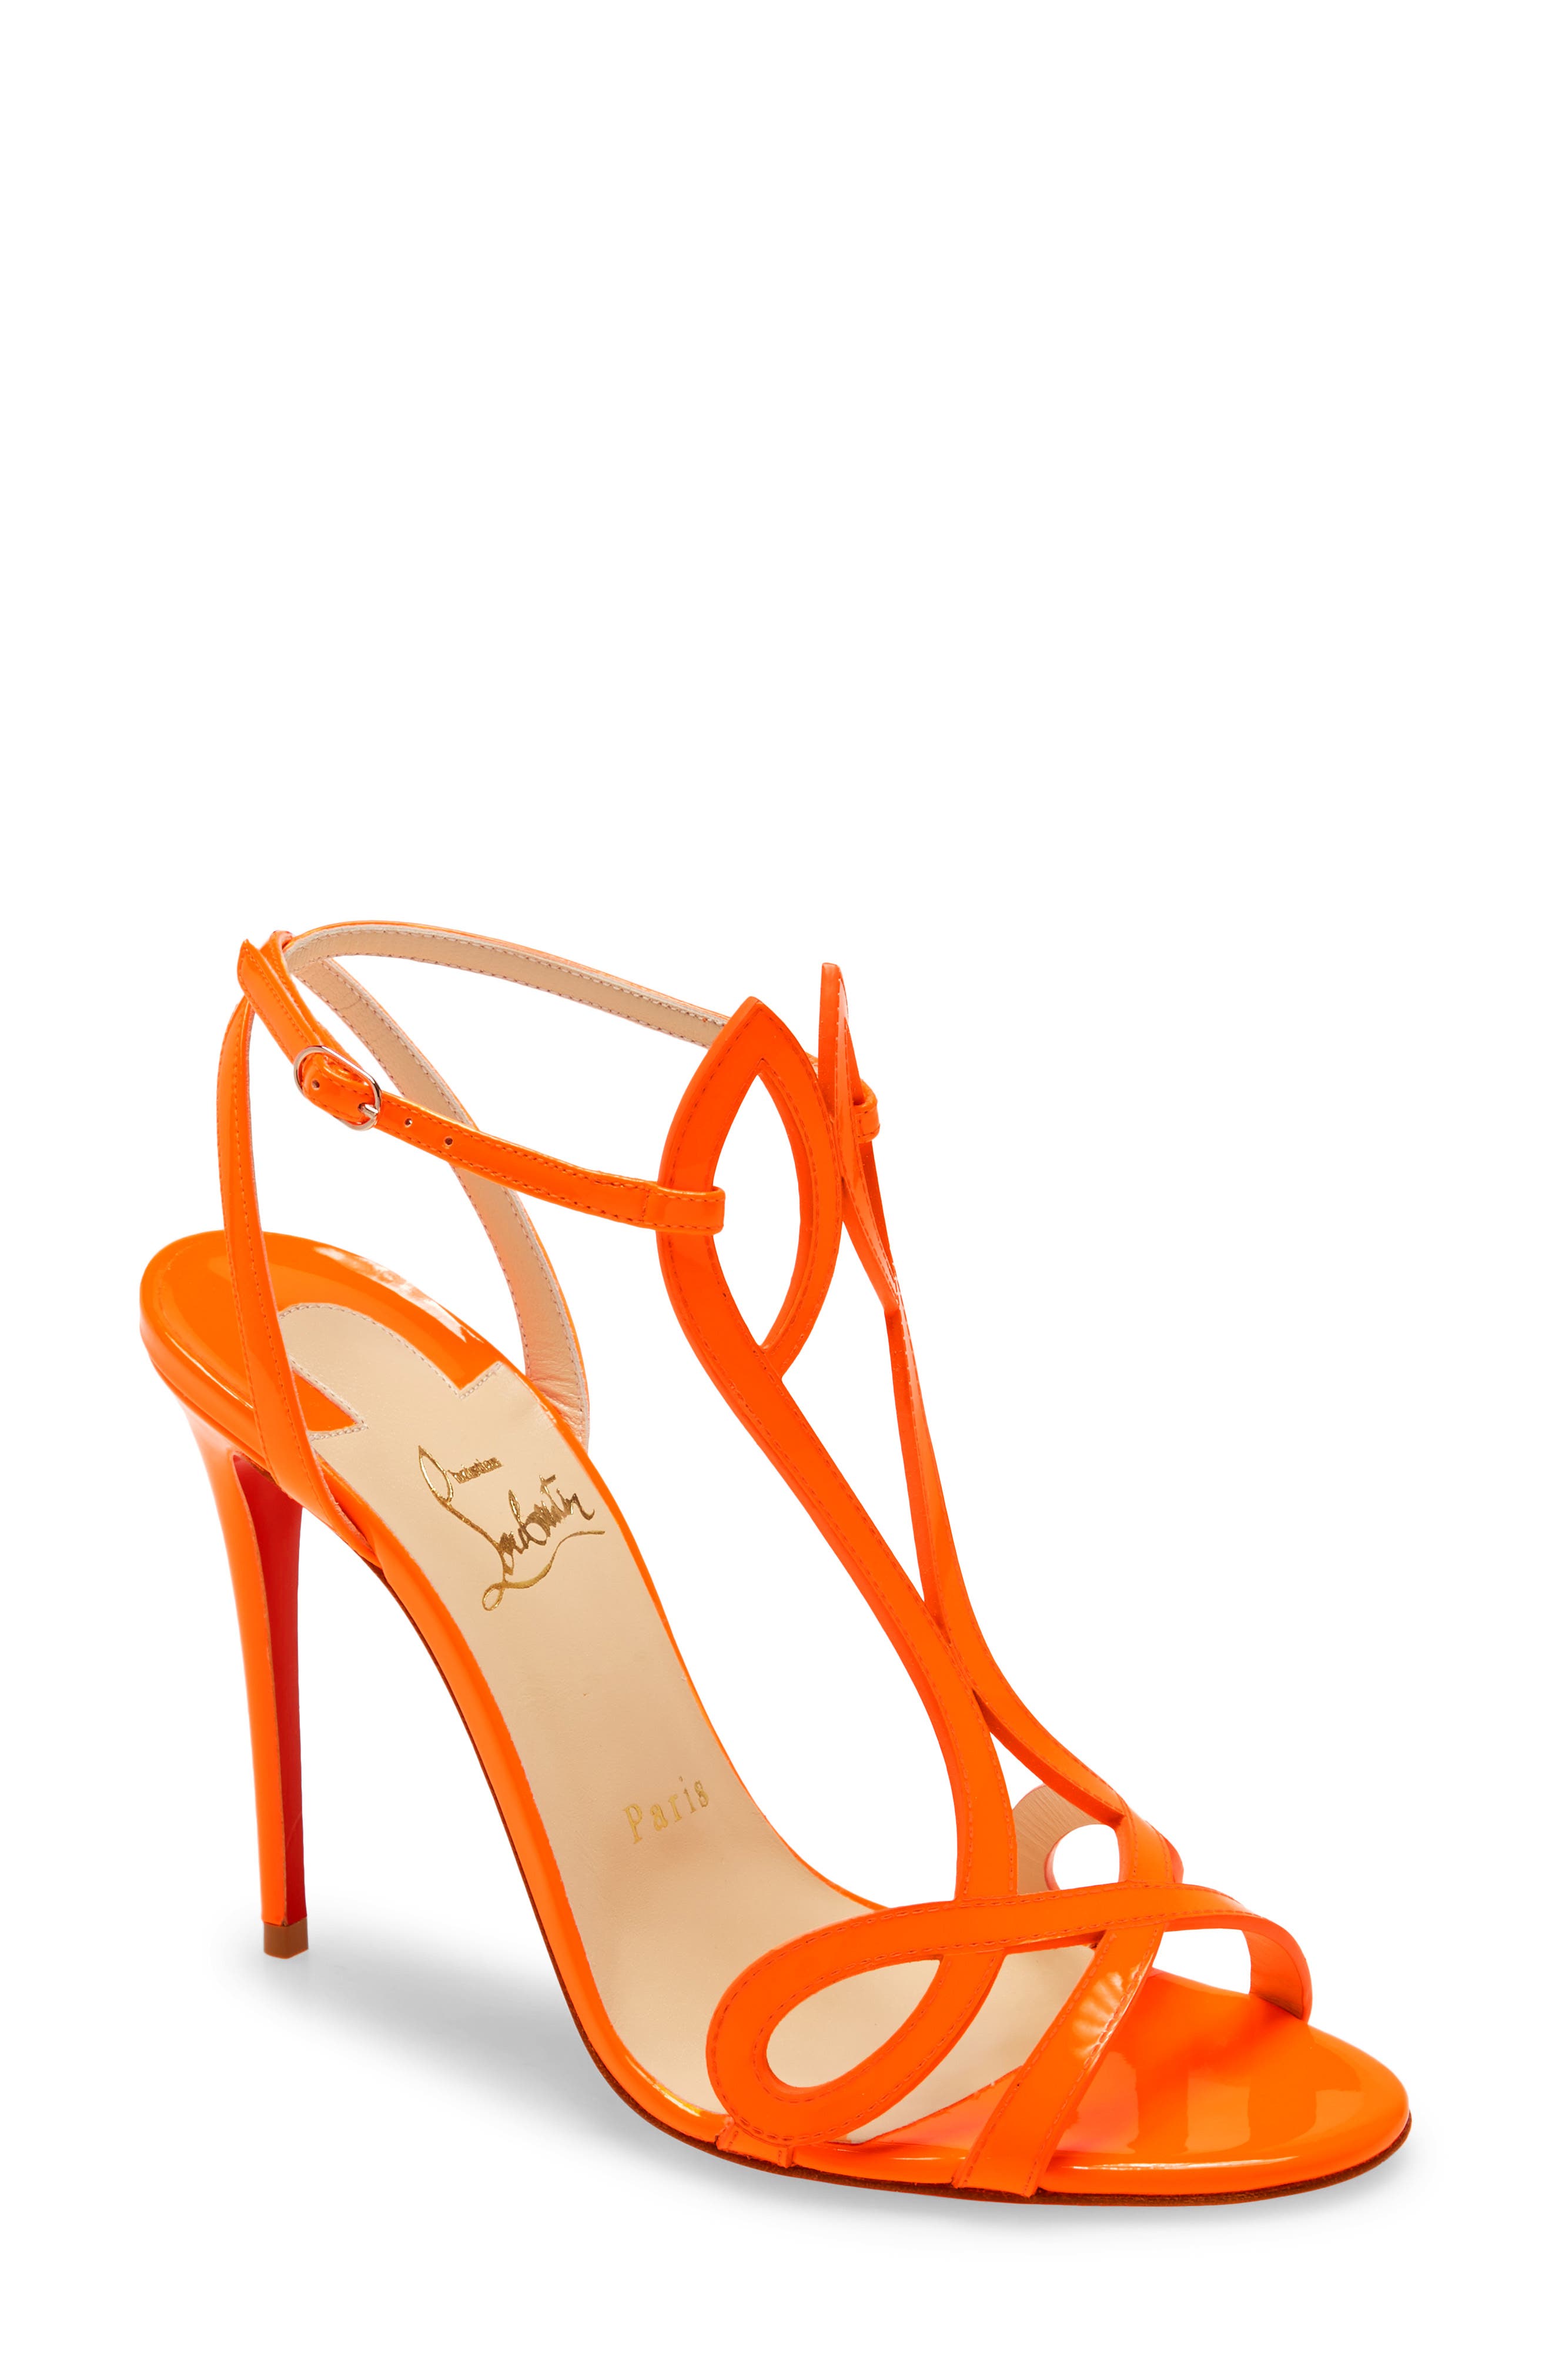 orange and white designer shoes